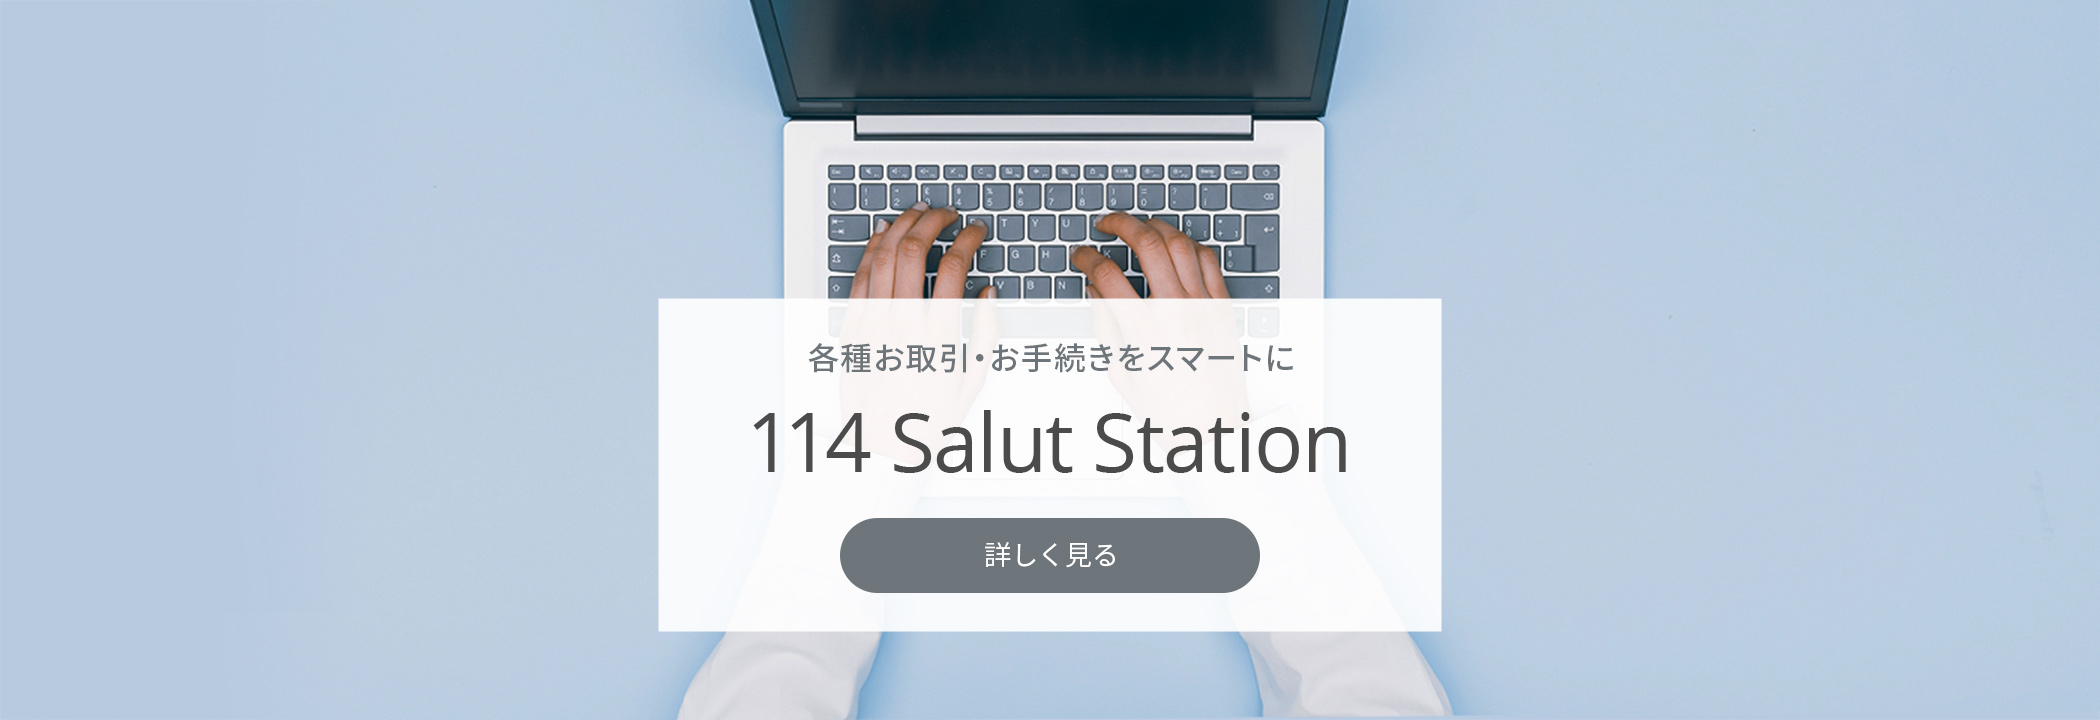 114 Salut Station